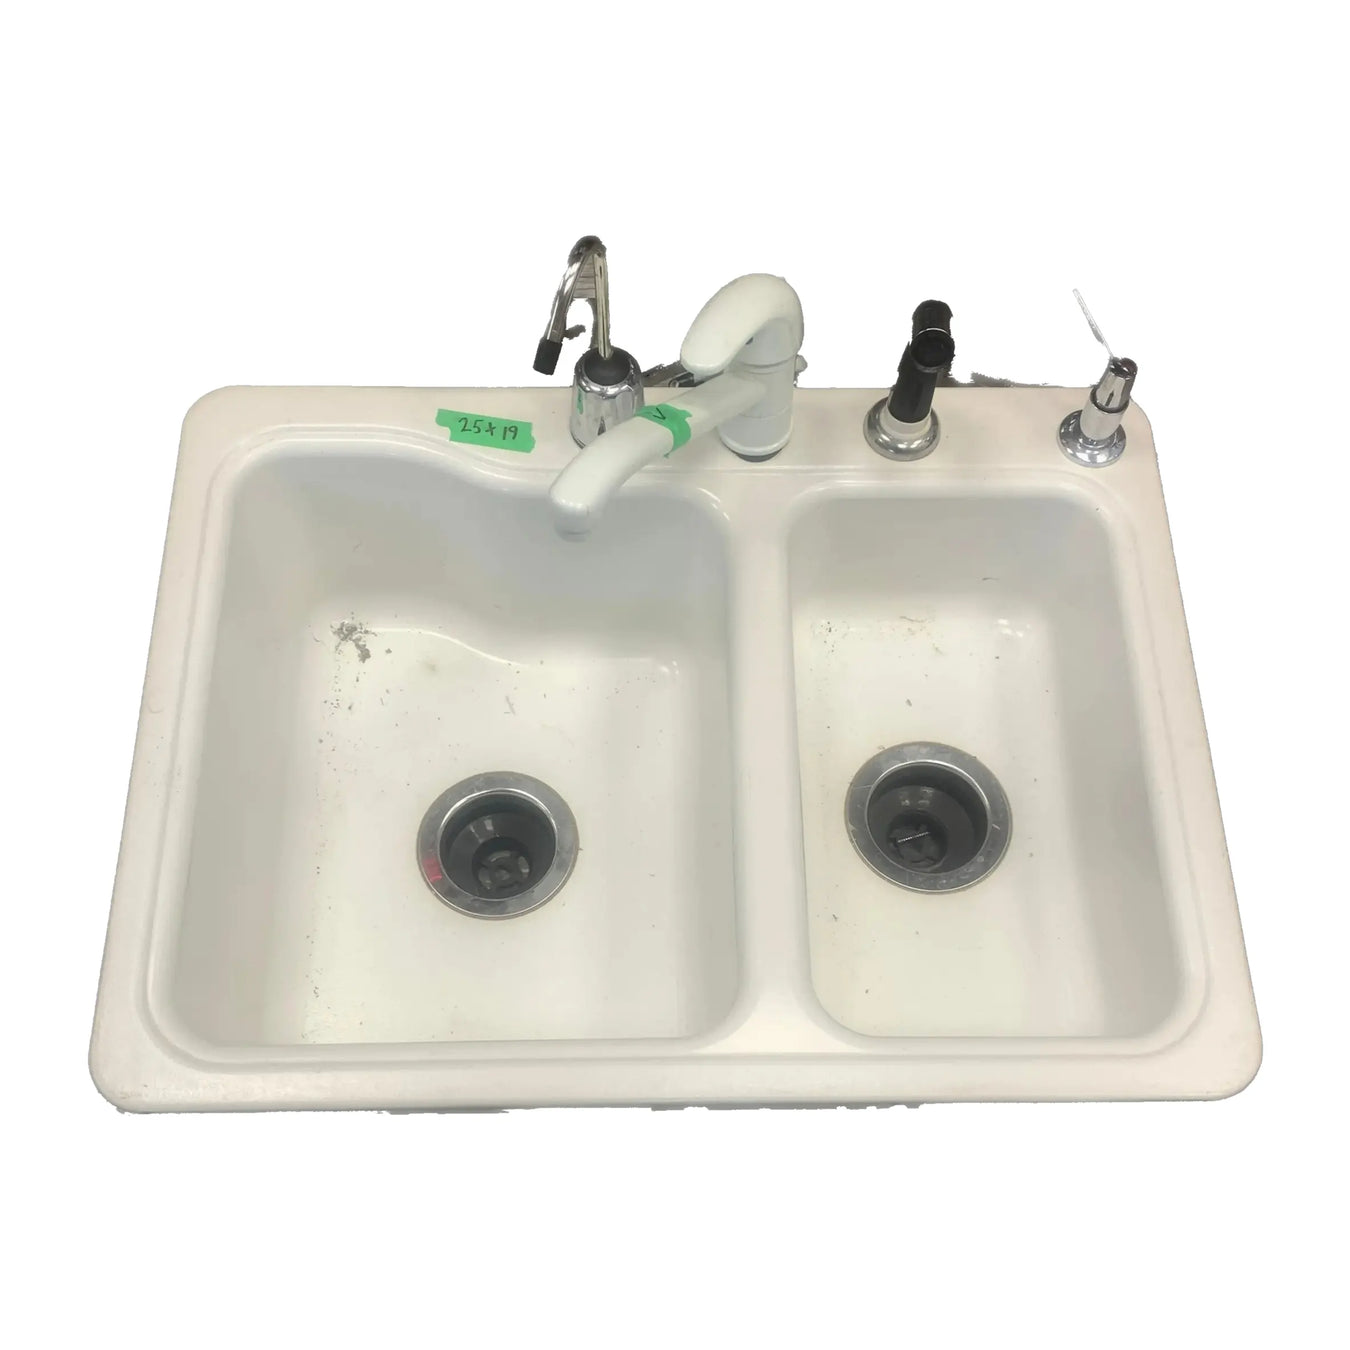 Used RV Sinks